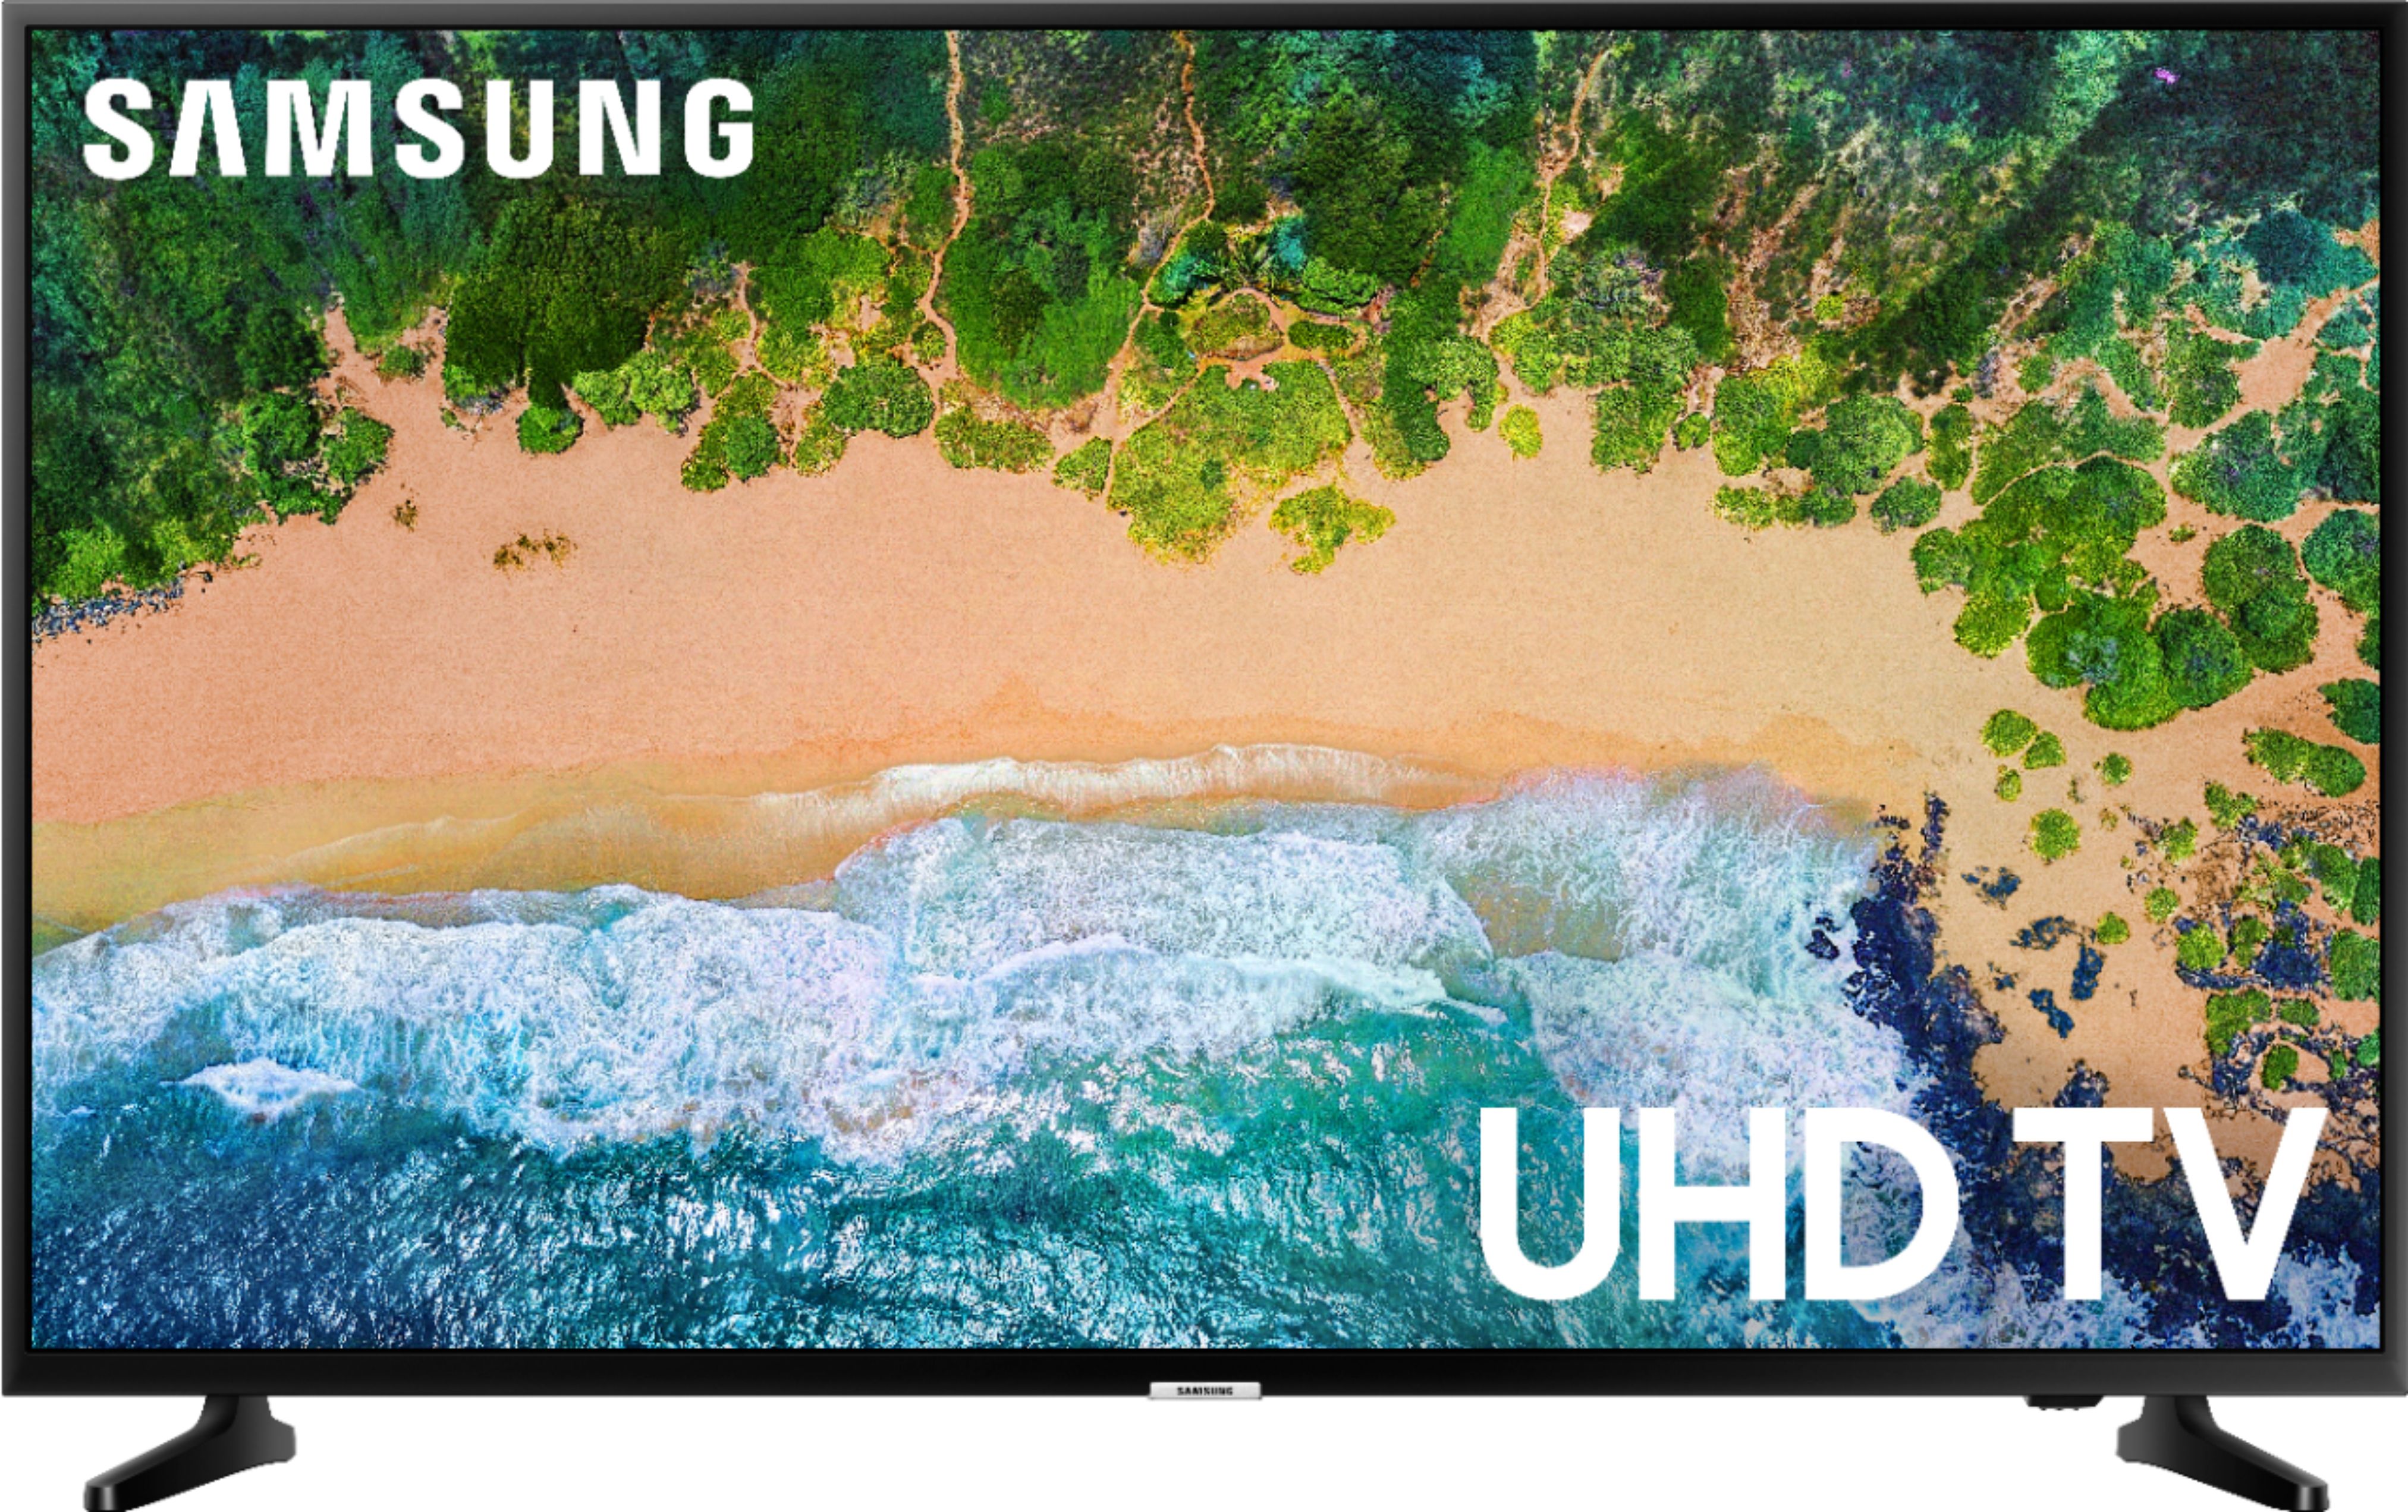 Samsung TV on Finance